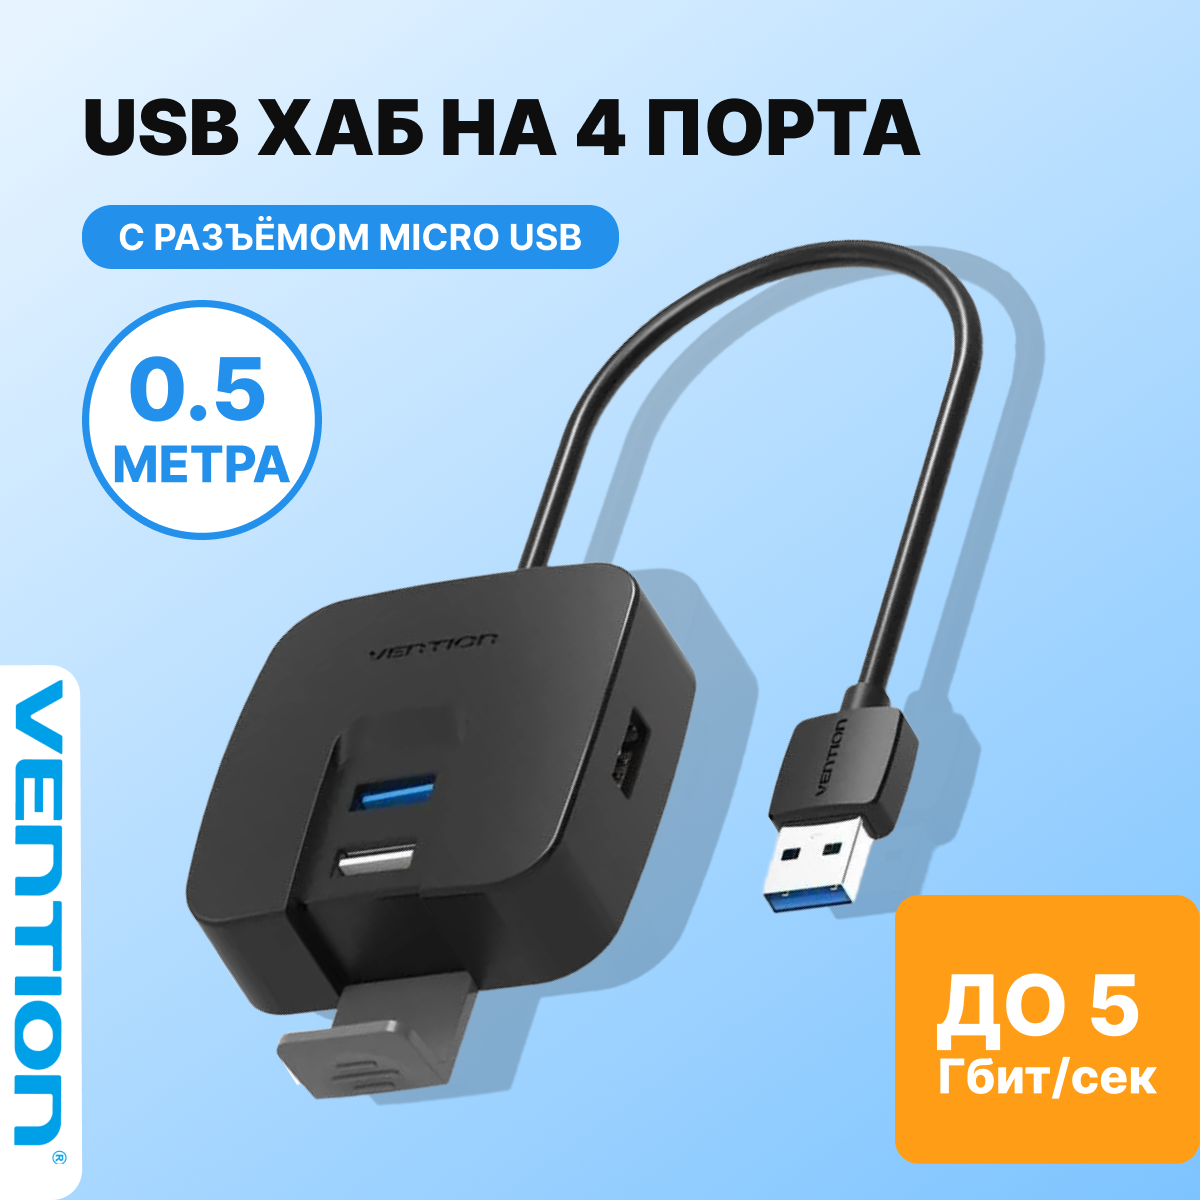 USB HUB на 4 порта длина 0.5 метра VENTION разветвитель OTG USB 2.0/ USB 3.0 для периферийных устройств, арт. CHABD